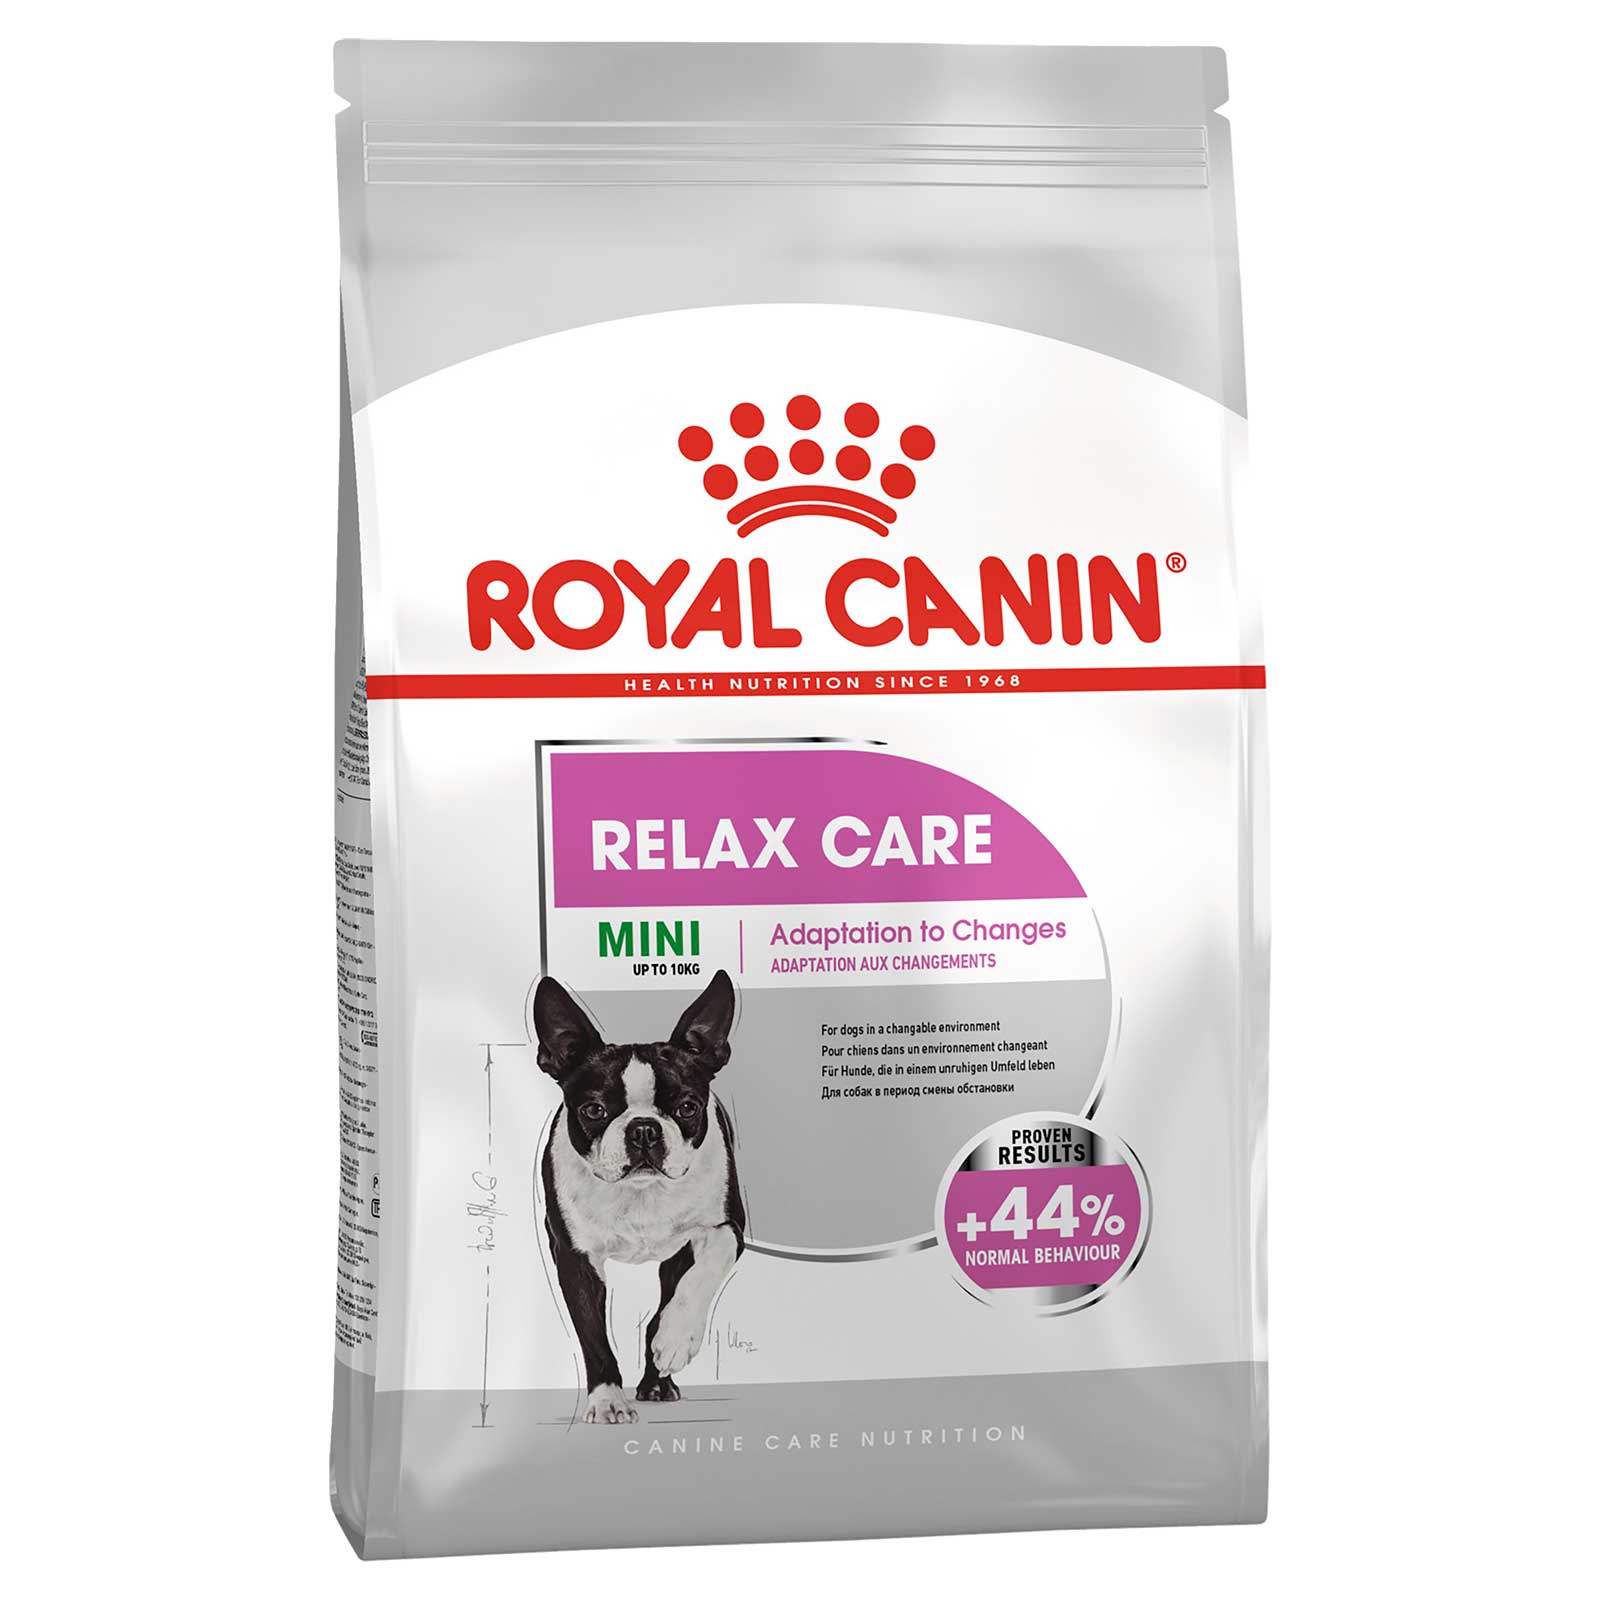 Royal Canin Dog Food Relax Care Mini